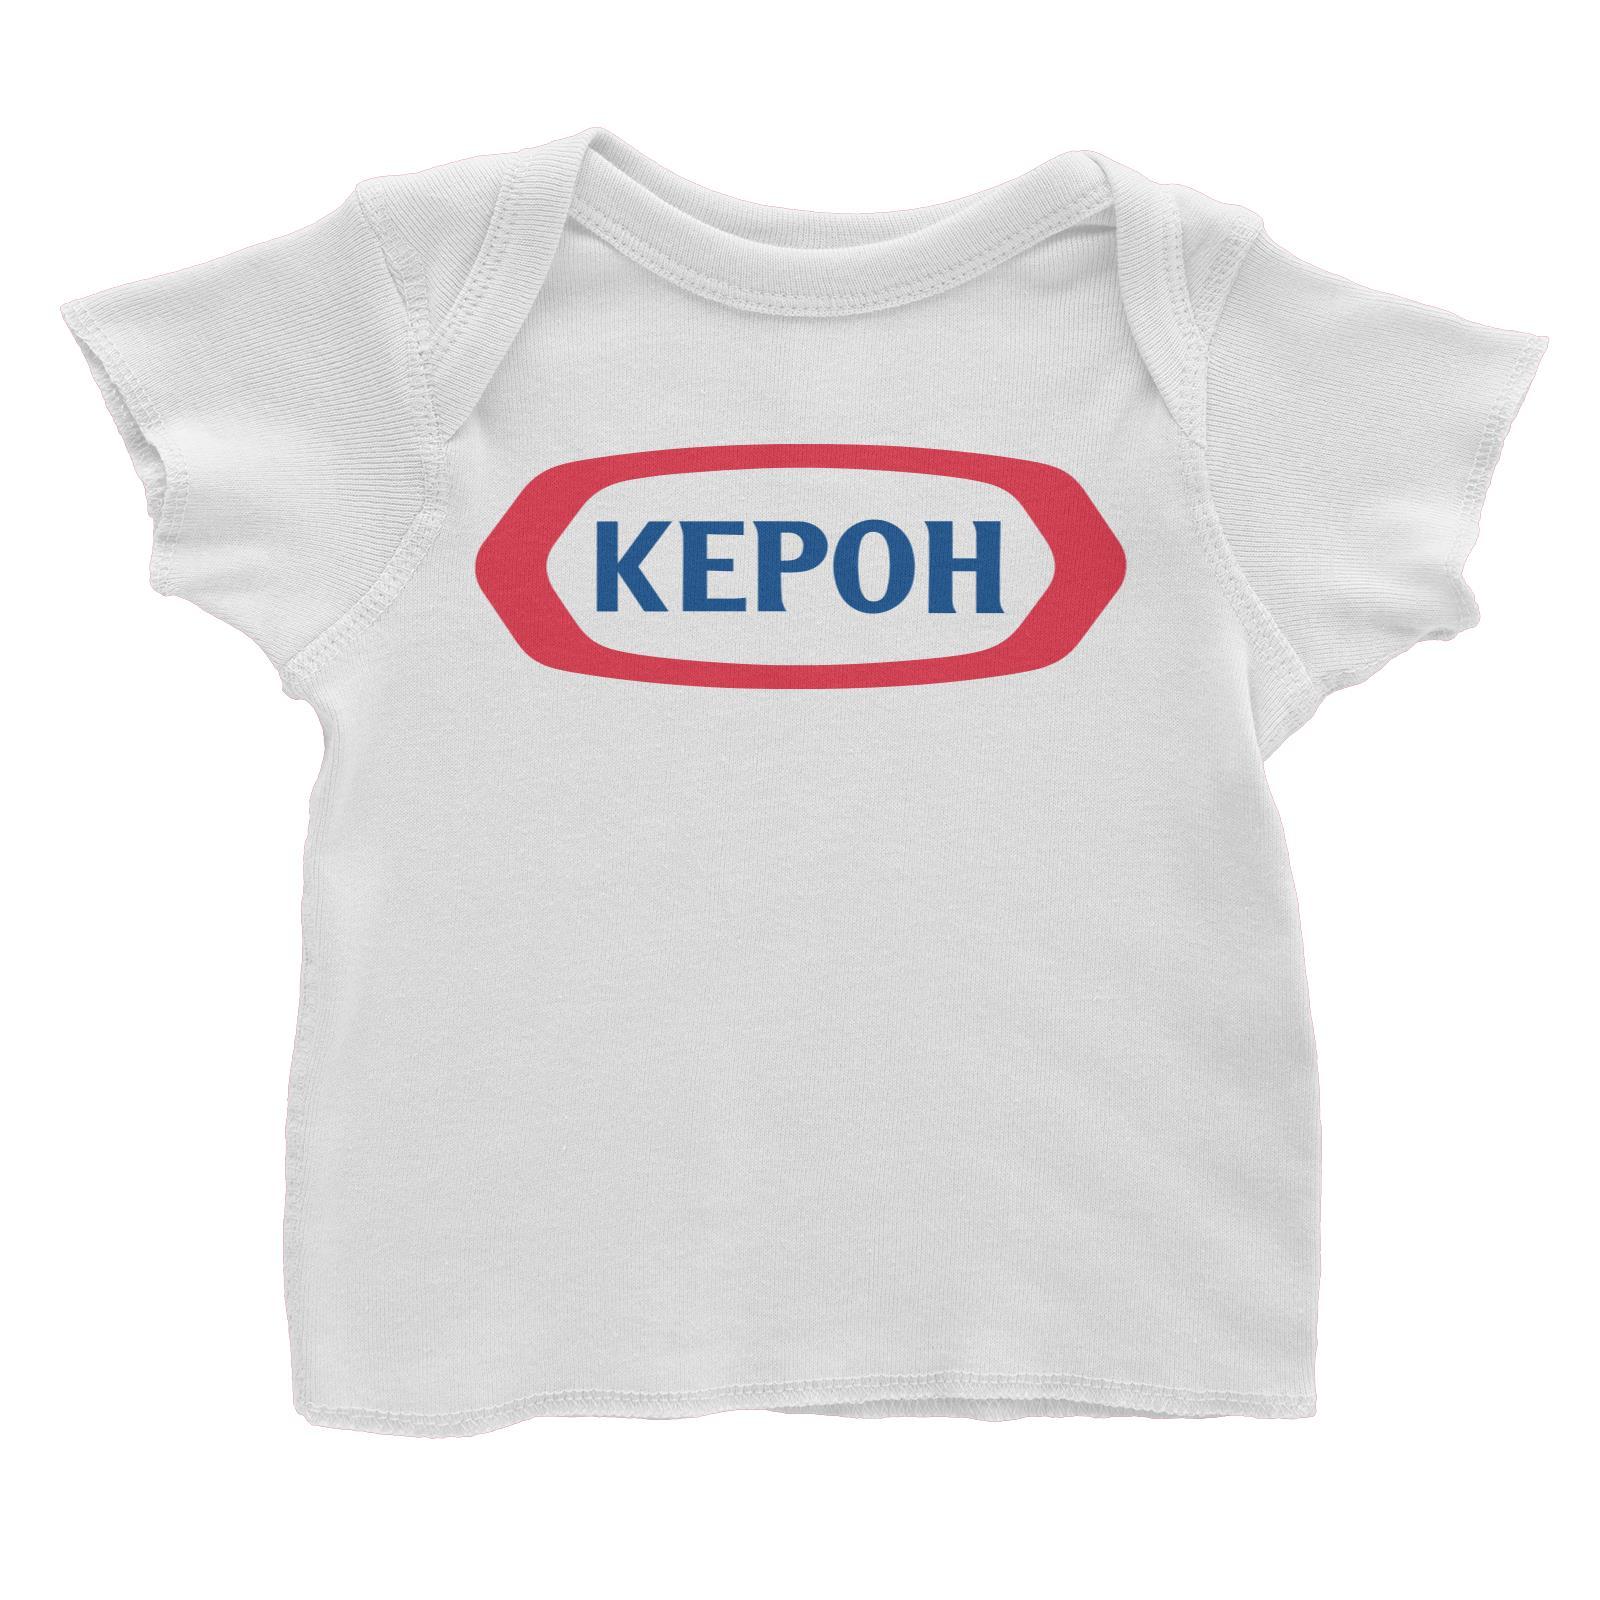 Slang Statement Kepoh Baby T-Shirt